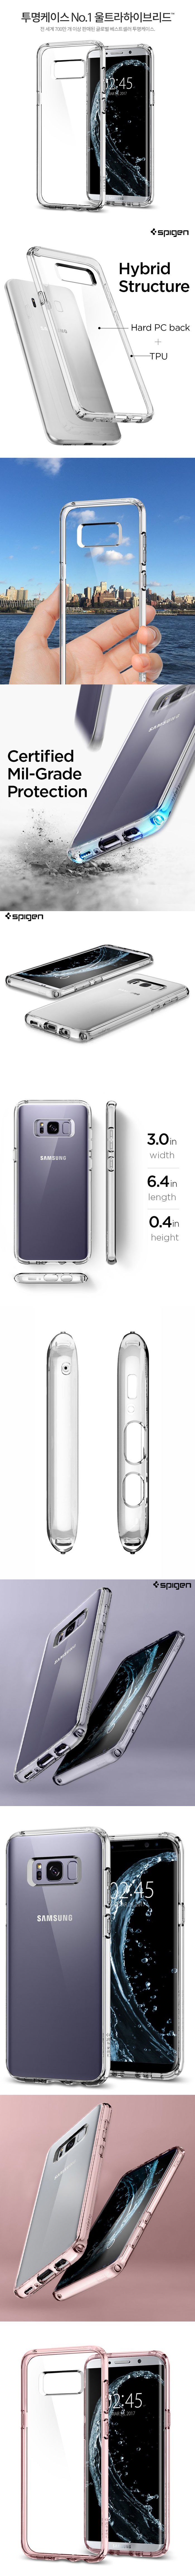 Ốp lưng Samsung Galaxy S8 Plus, Bao da Samsung S8 Plus  chất lượng cao nhất Việt Nam Op-lung-galaxy-s8-plus-spigen-ultra-crystal-trong-suot-chong-soc-usa-17